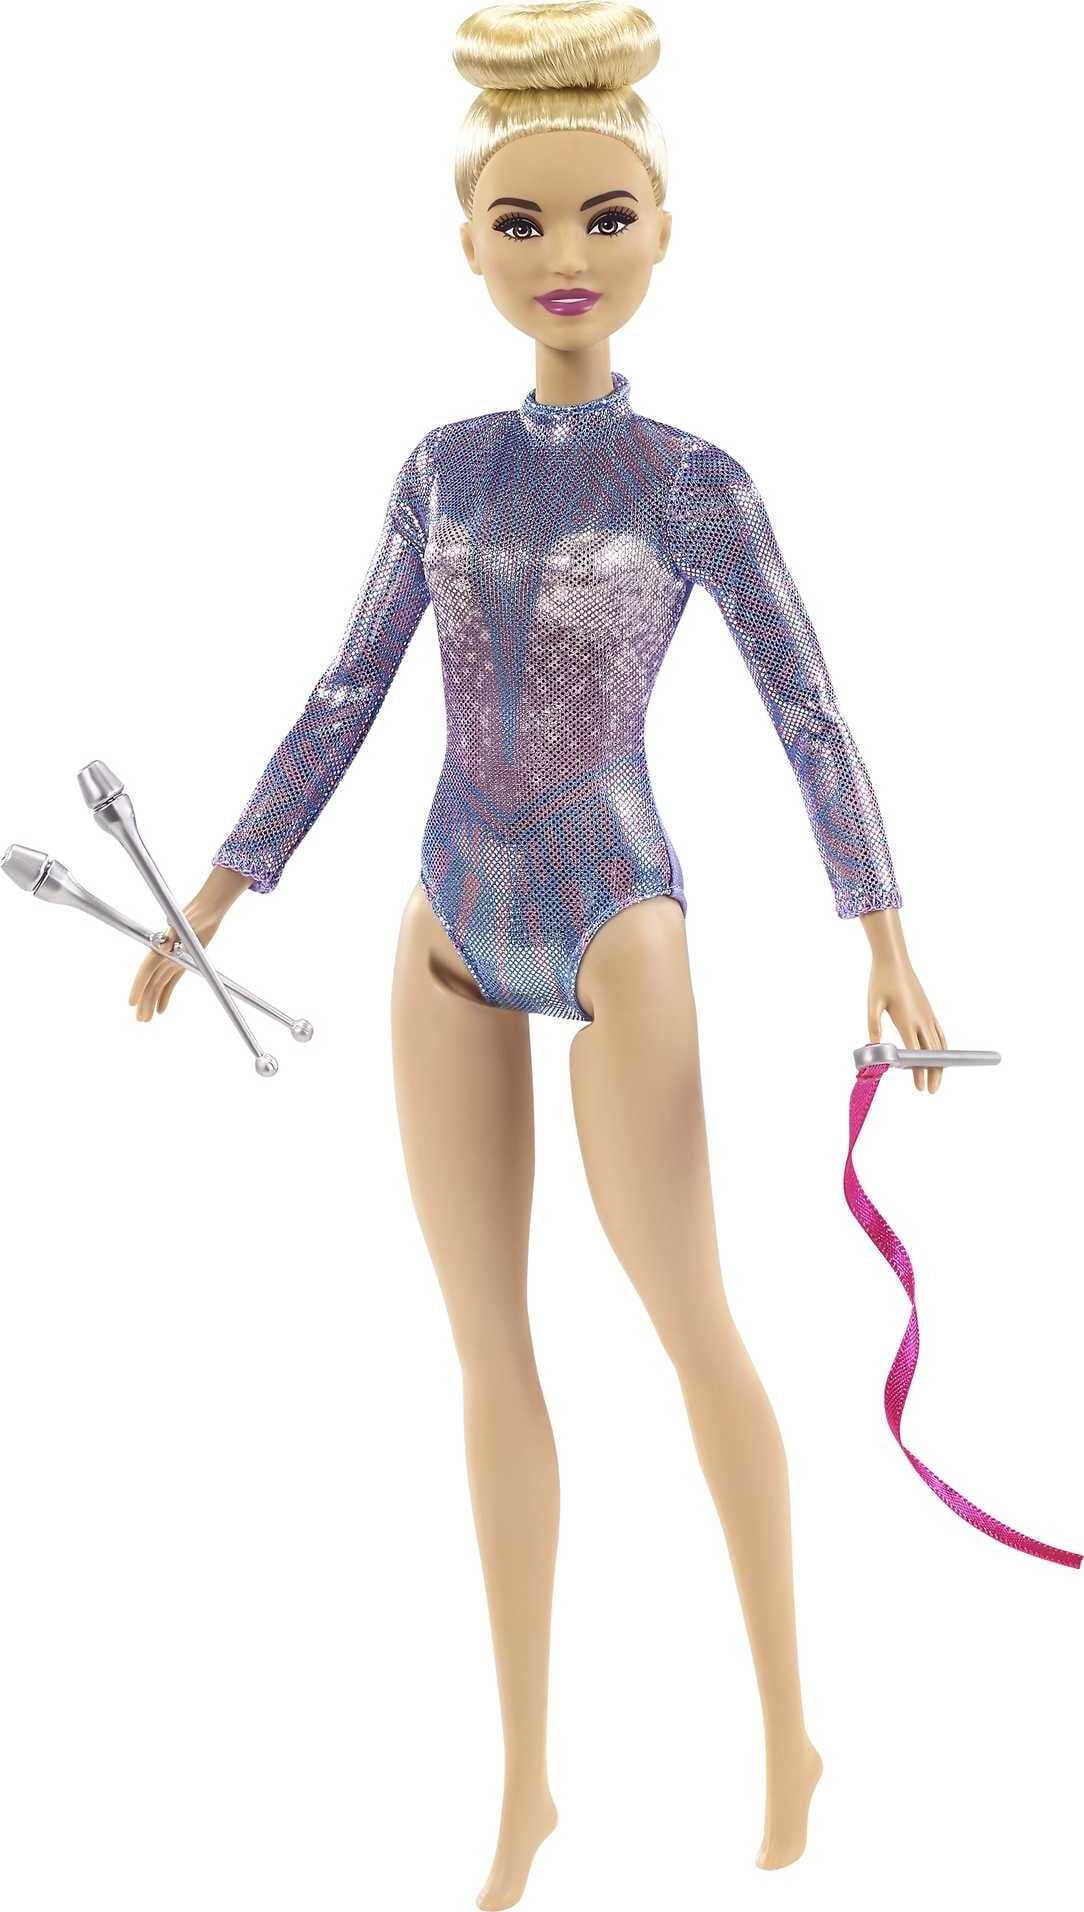 12" Barbie Career Rhythmic Gymnast Blonde Doll w/ Leotard & Accessories $7.97 + Free Store P/U at Walmart or Free Shipping w/ Walmart+ or on $35+